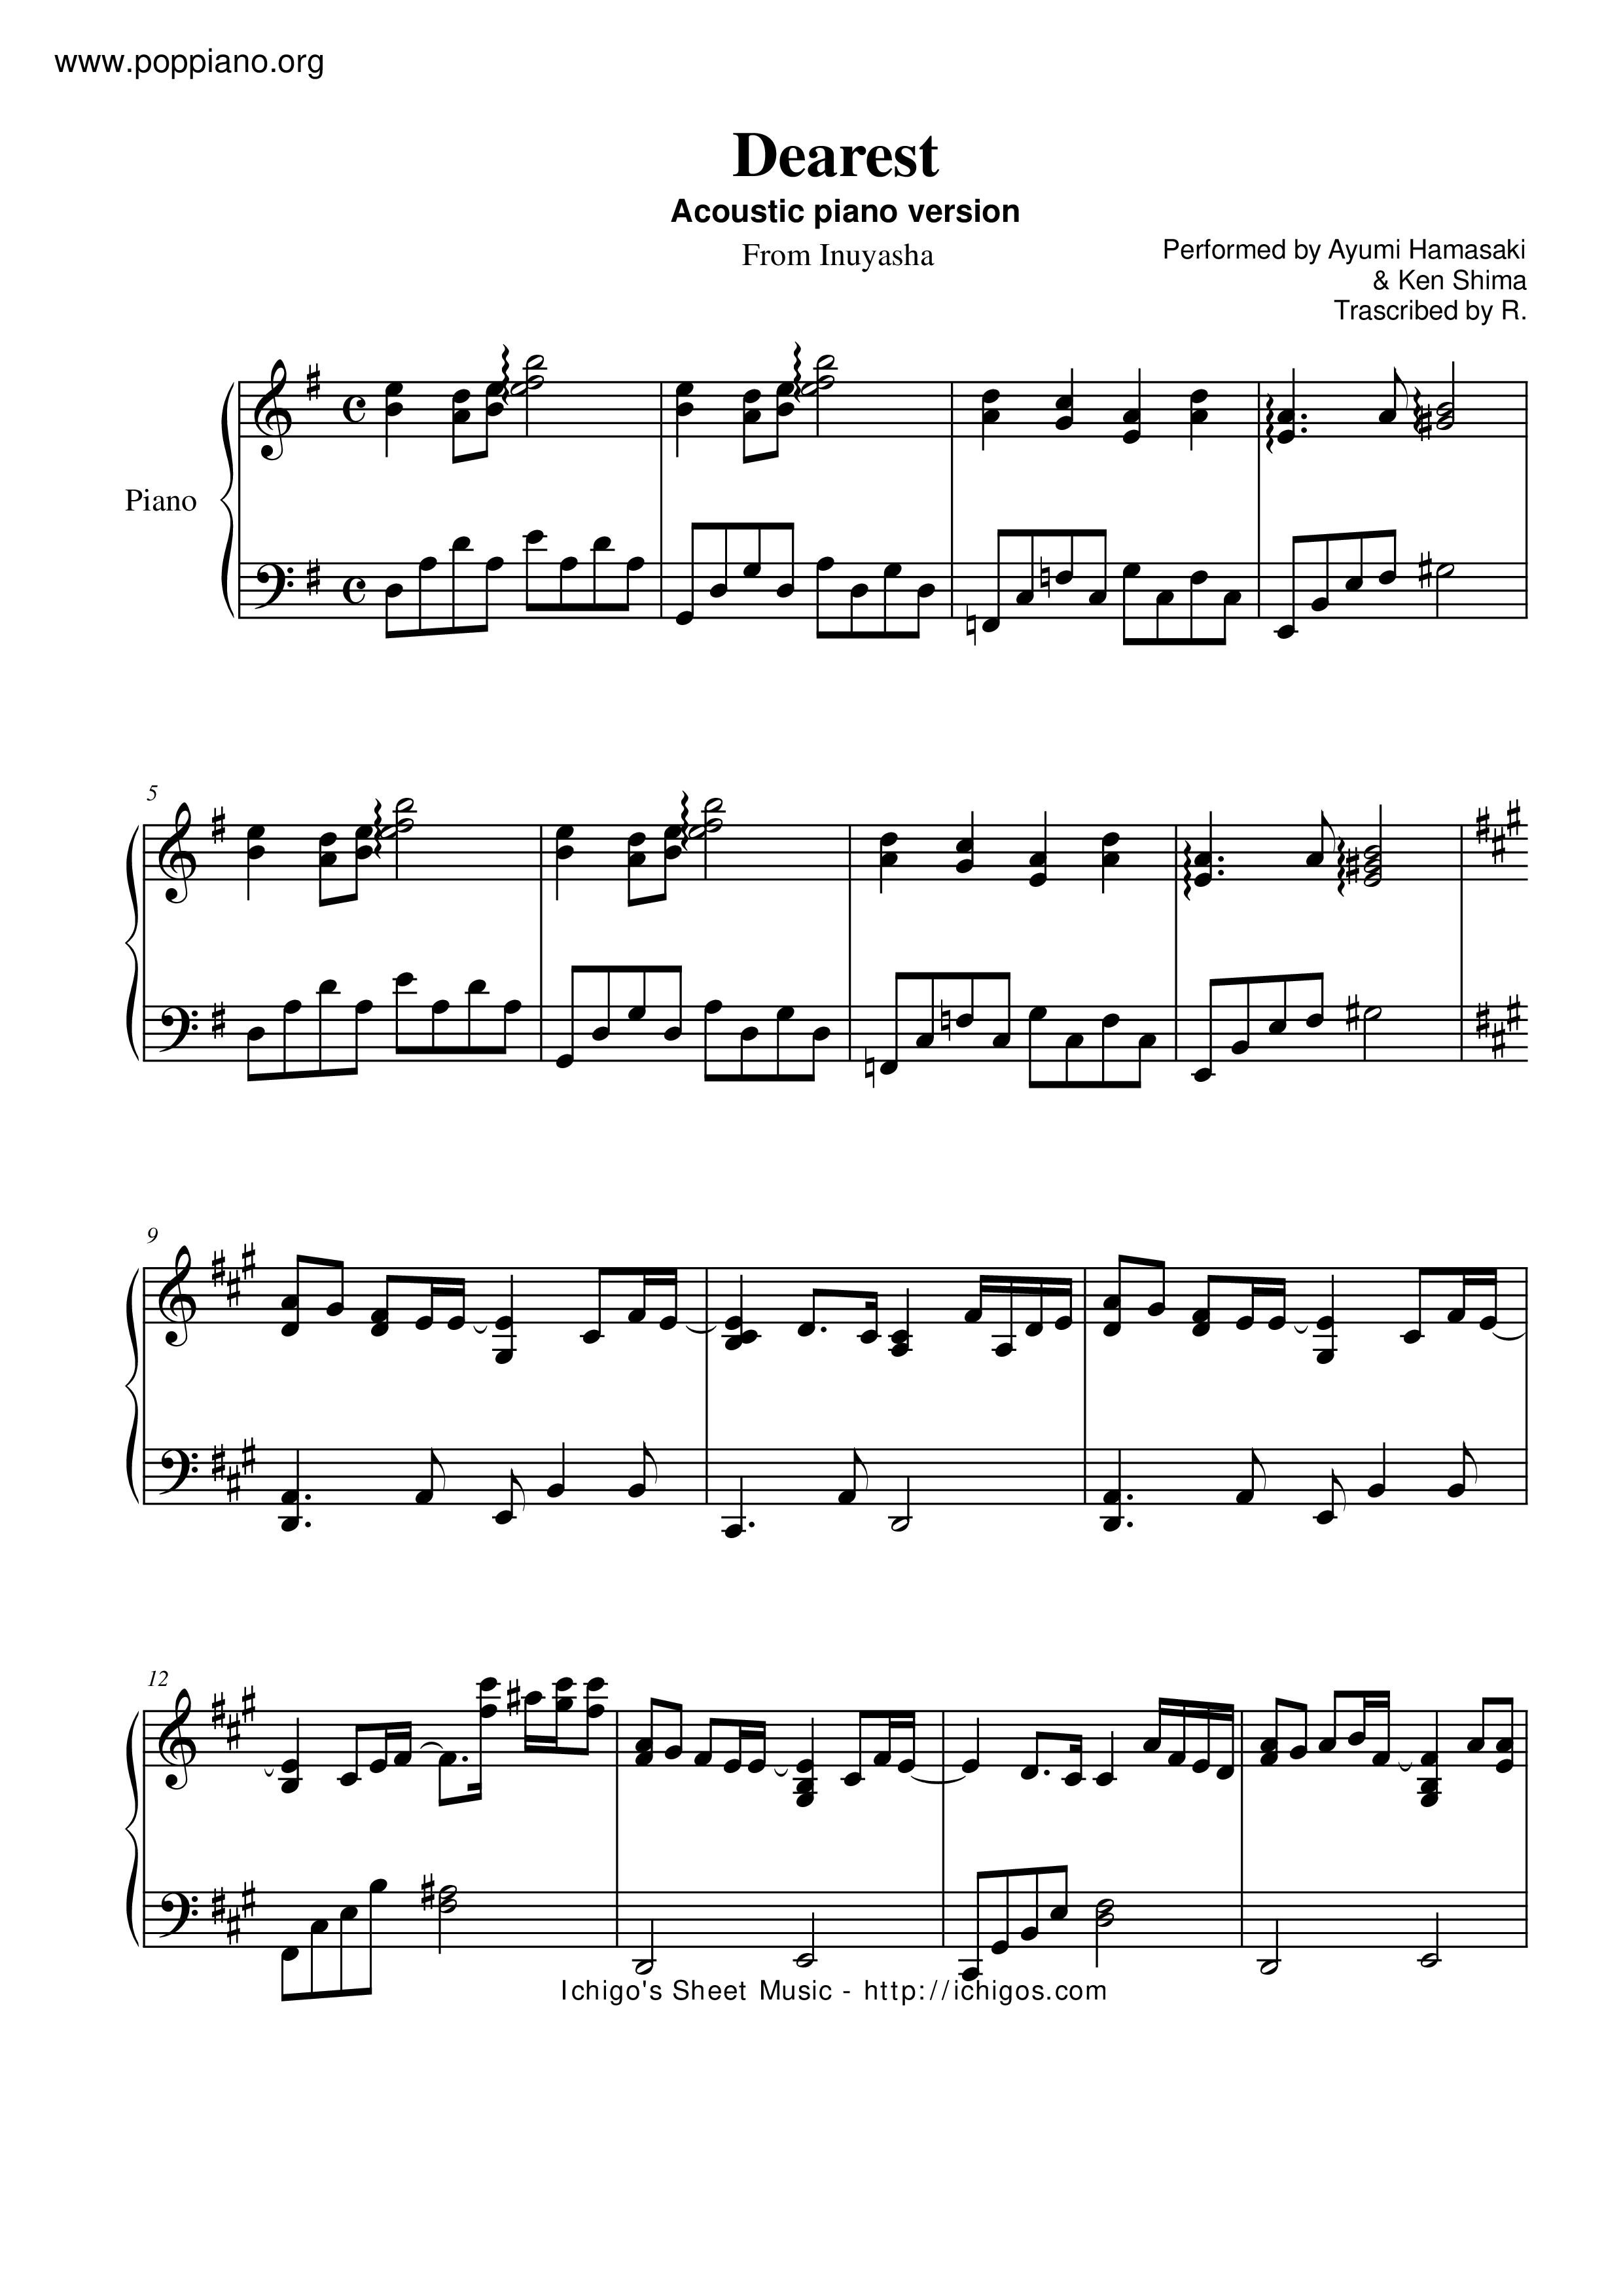 Dearest - Accoustic Piano Version Score